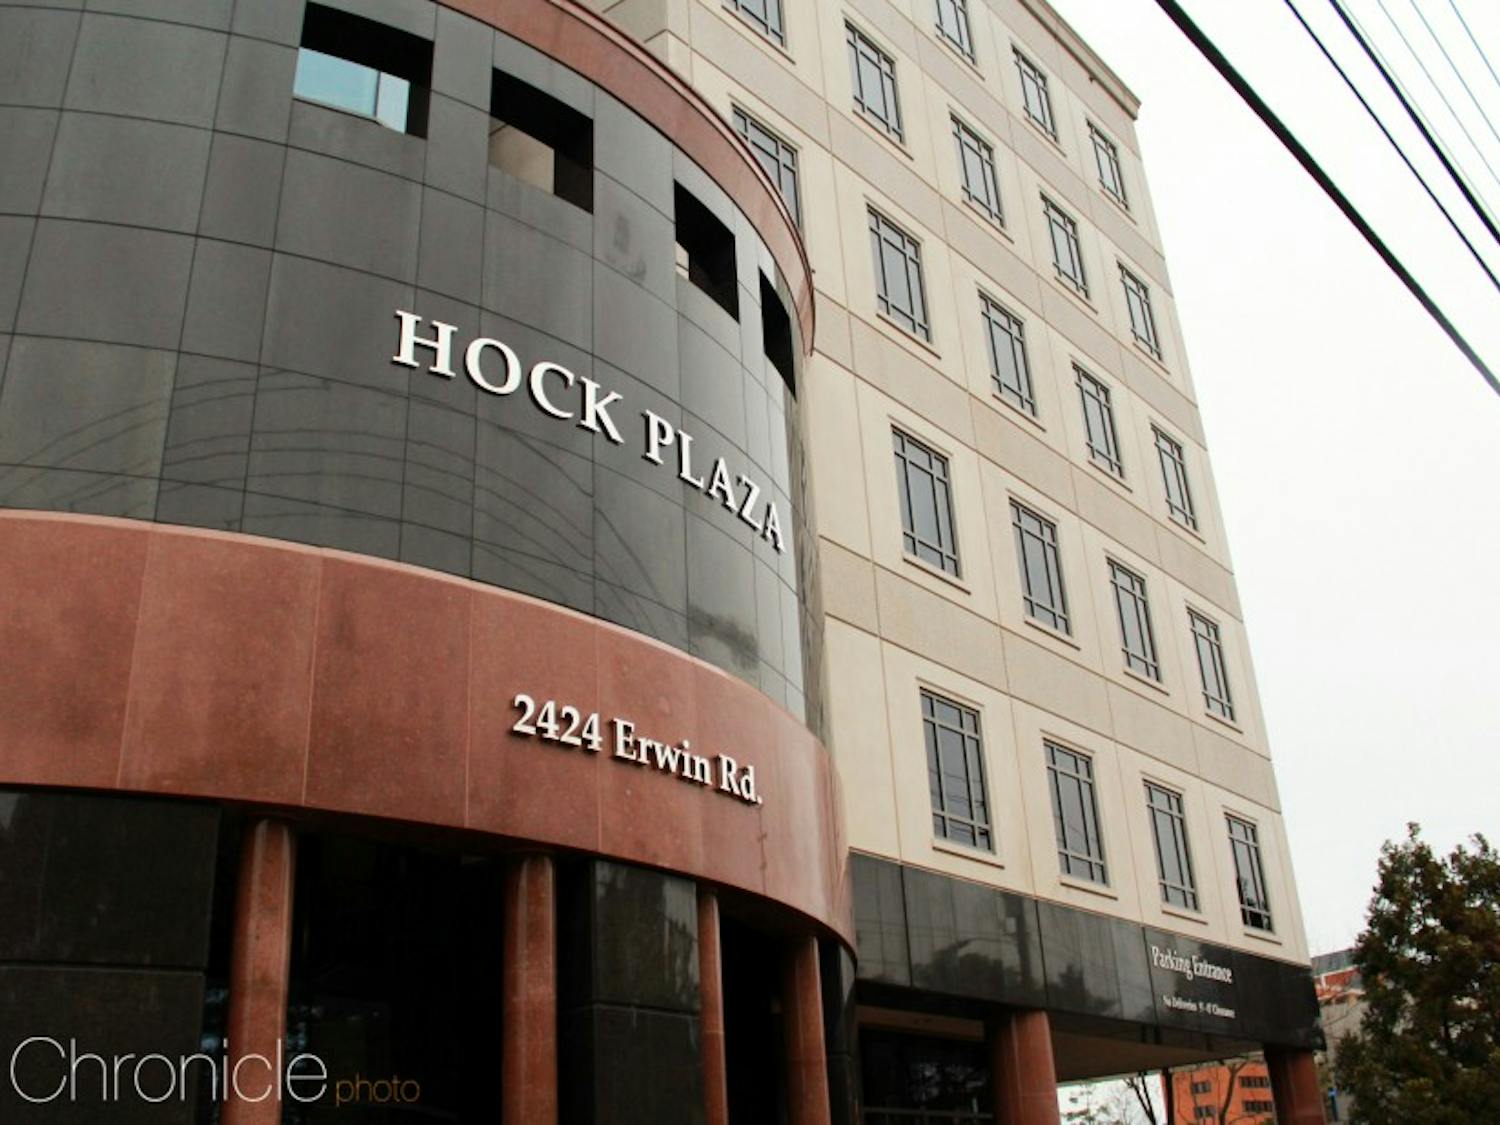 Hock Plaza